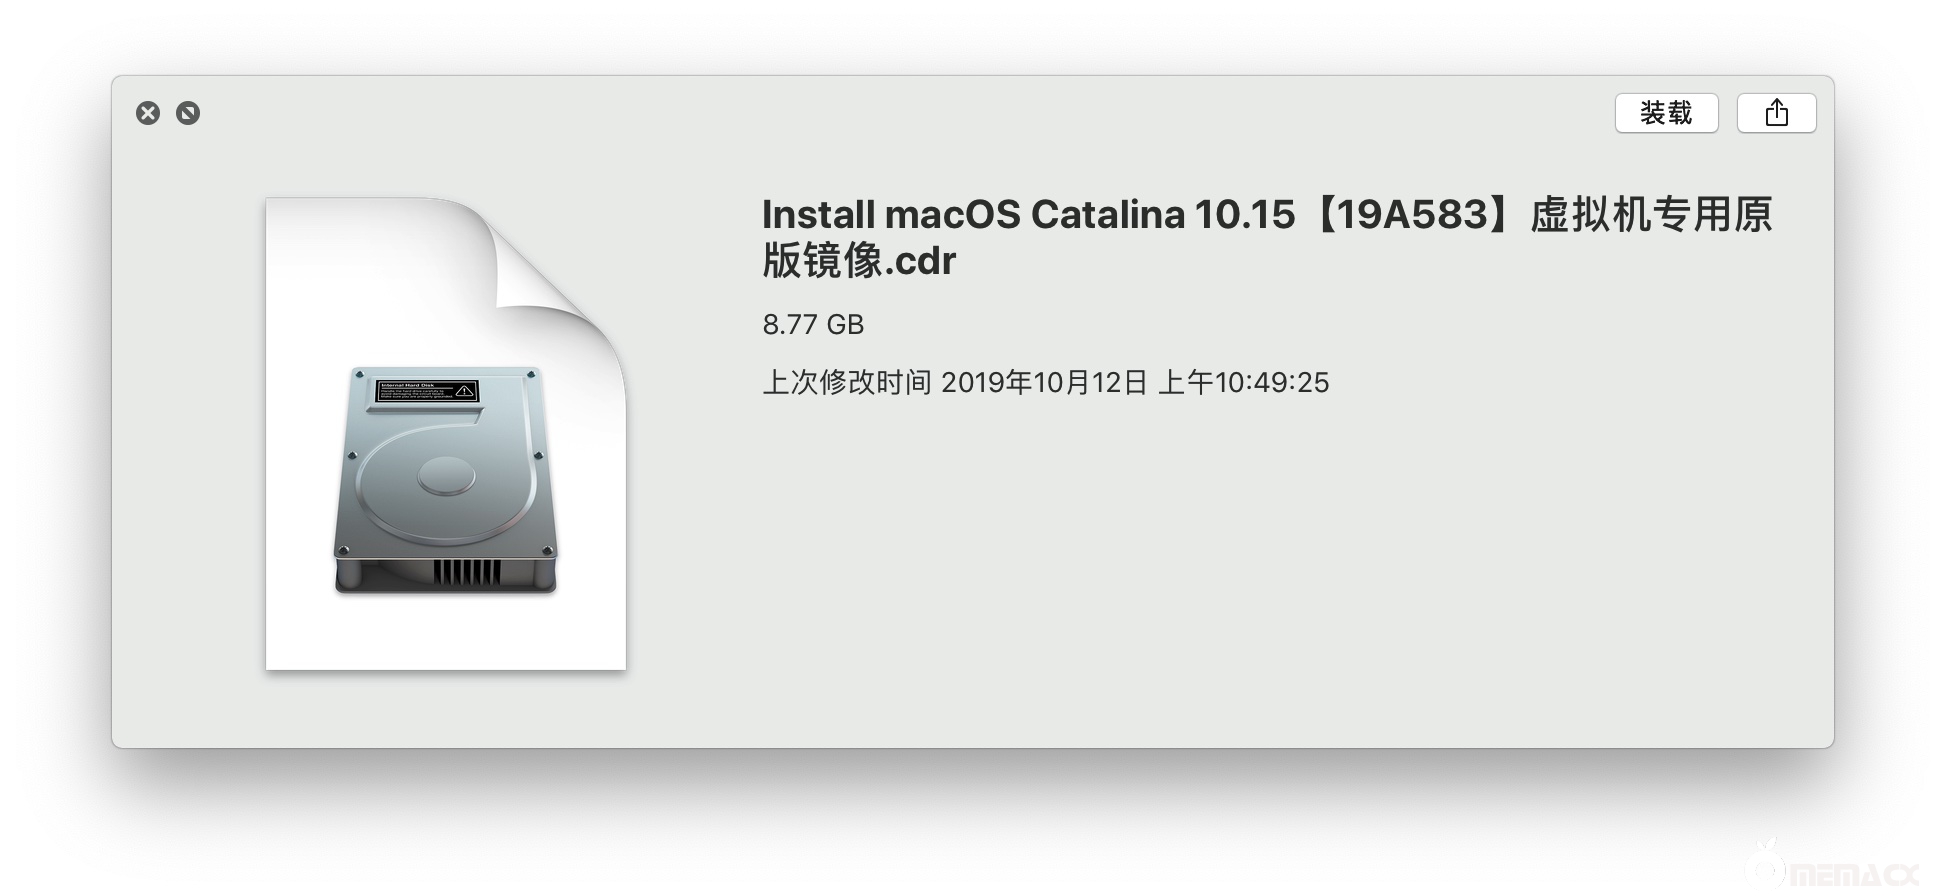 macOS Catalina 10.15.jpg